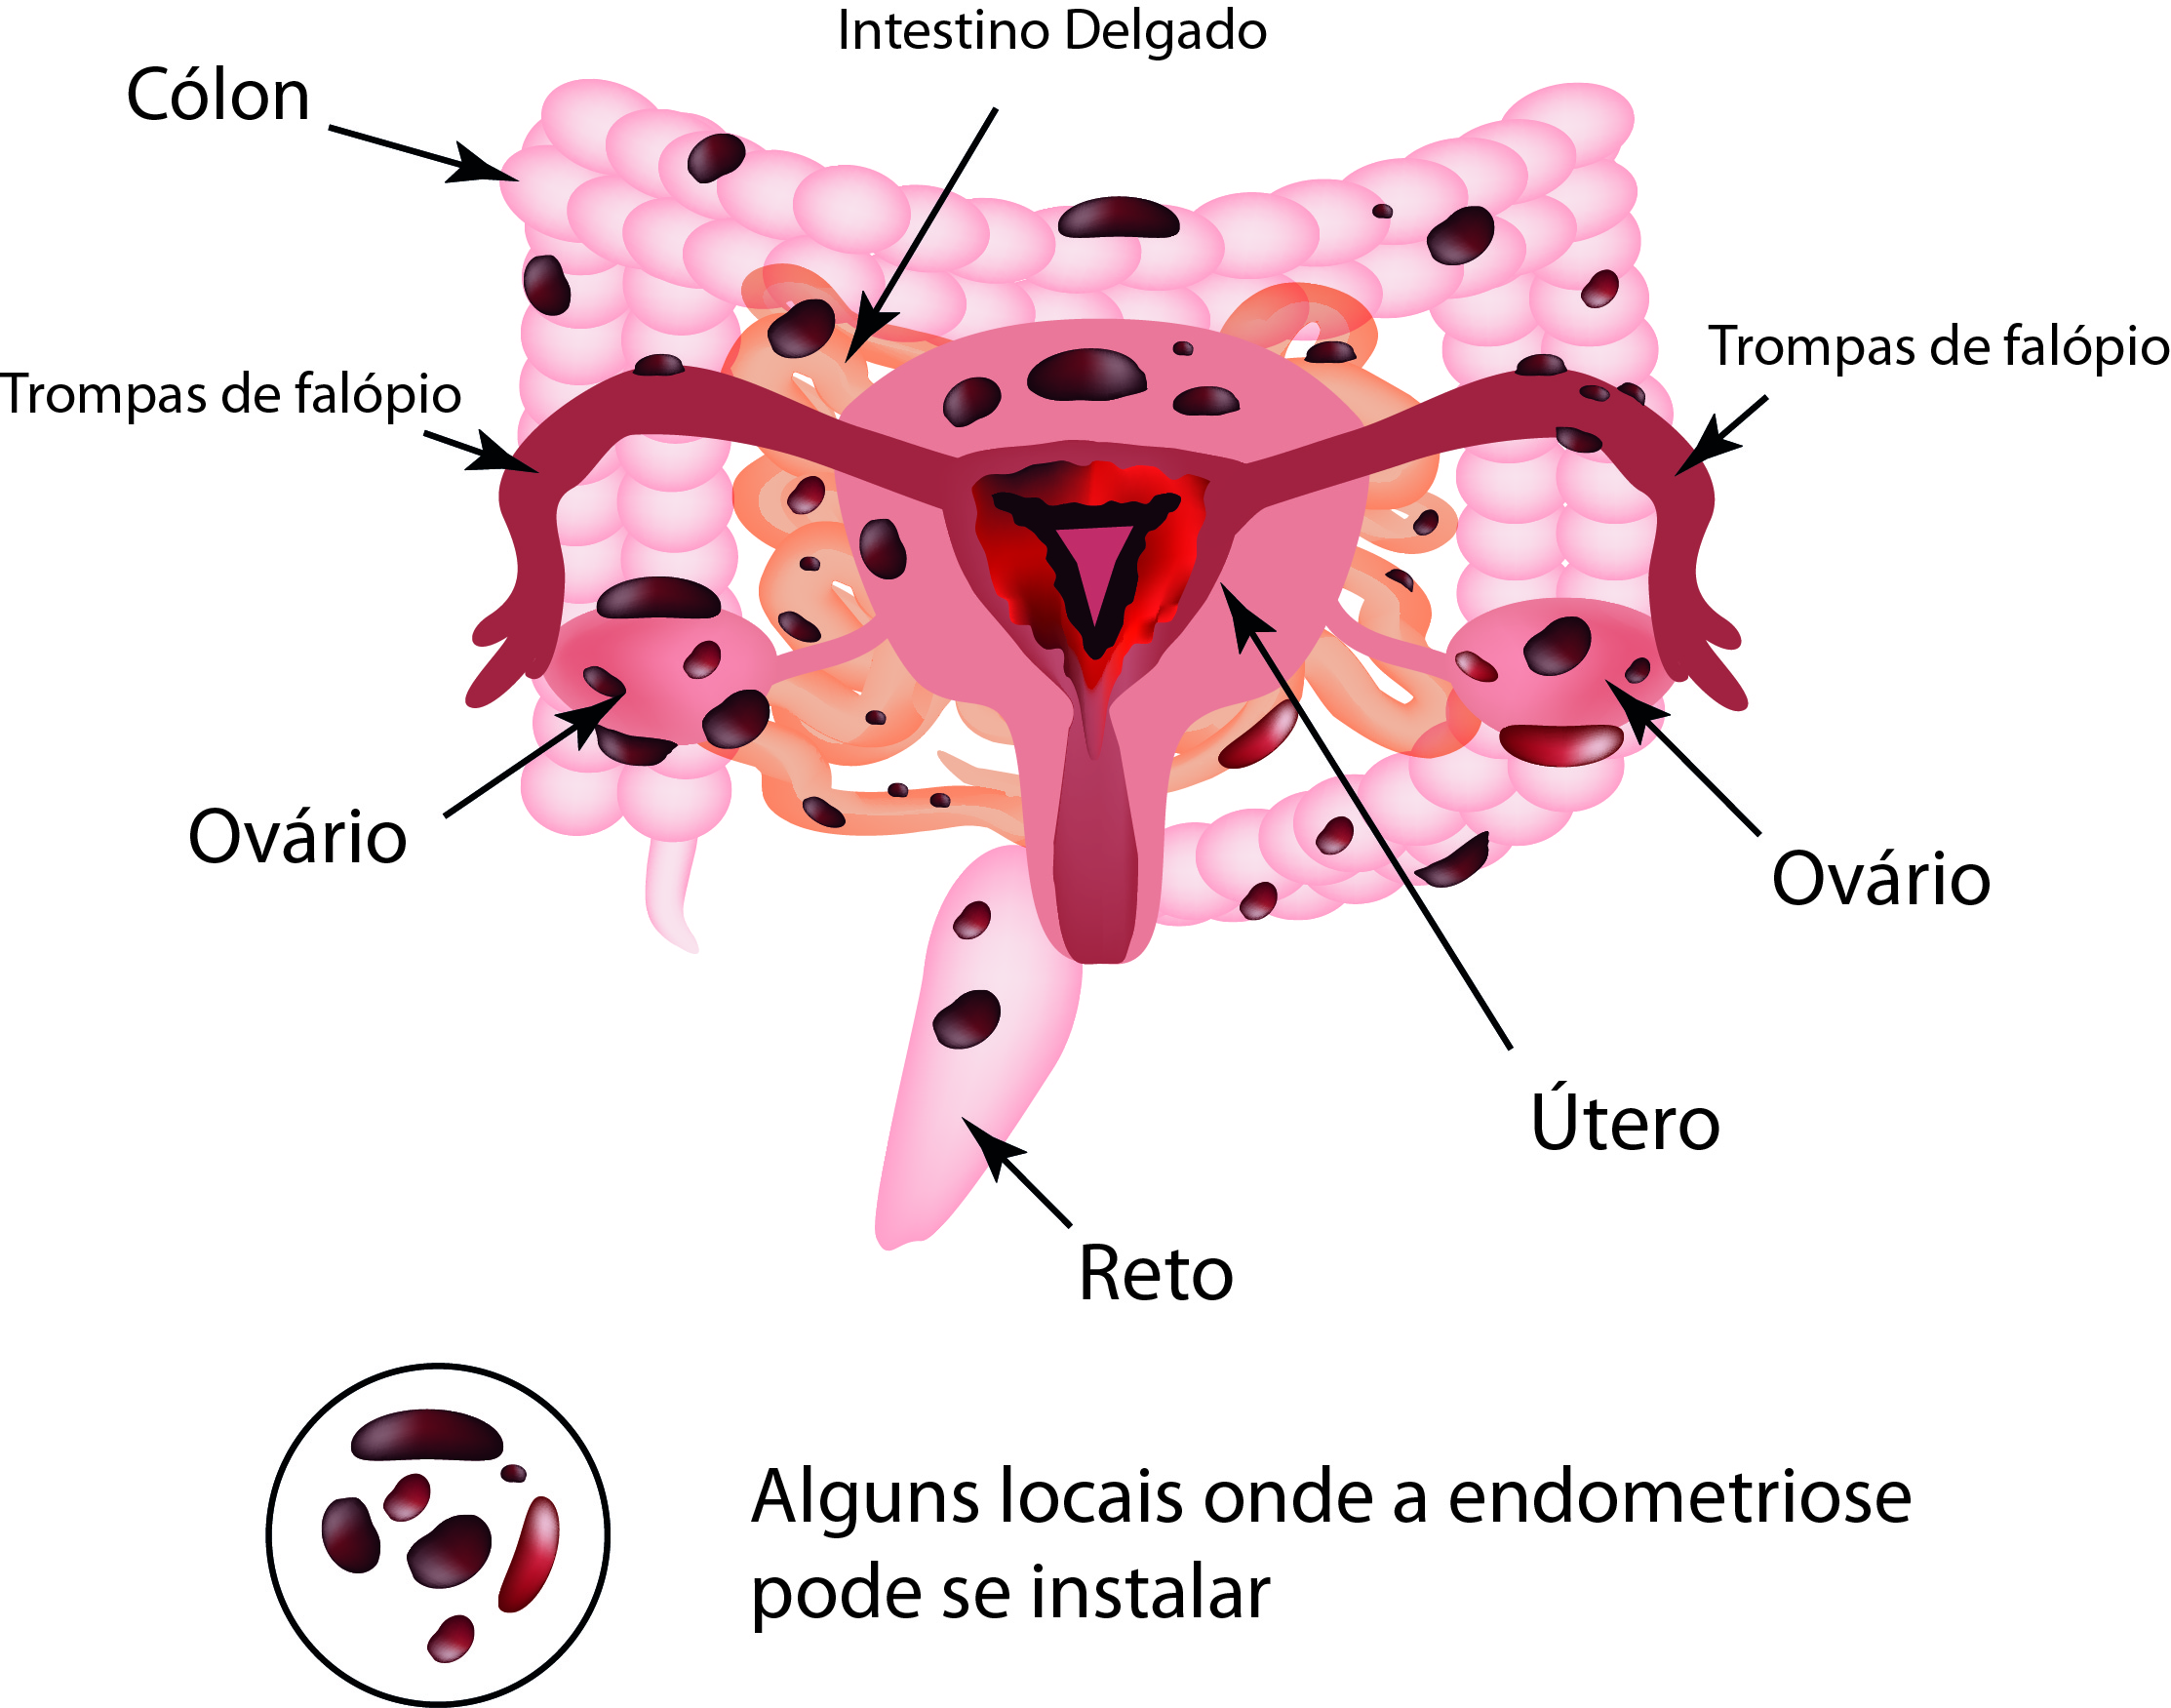 Endometriosis profunda